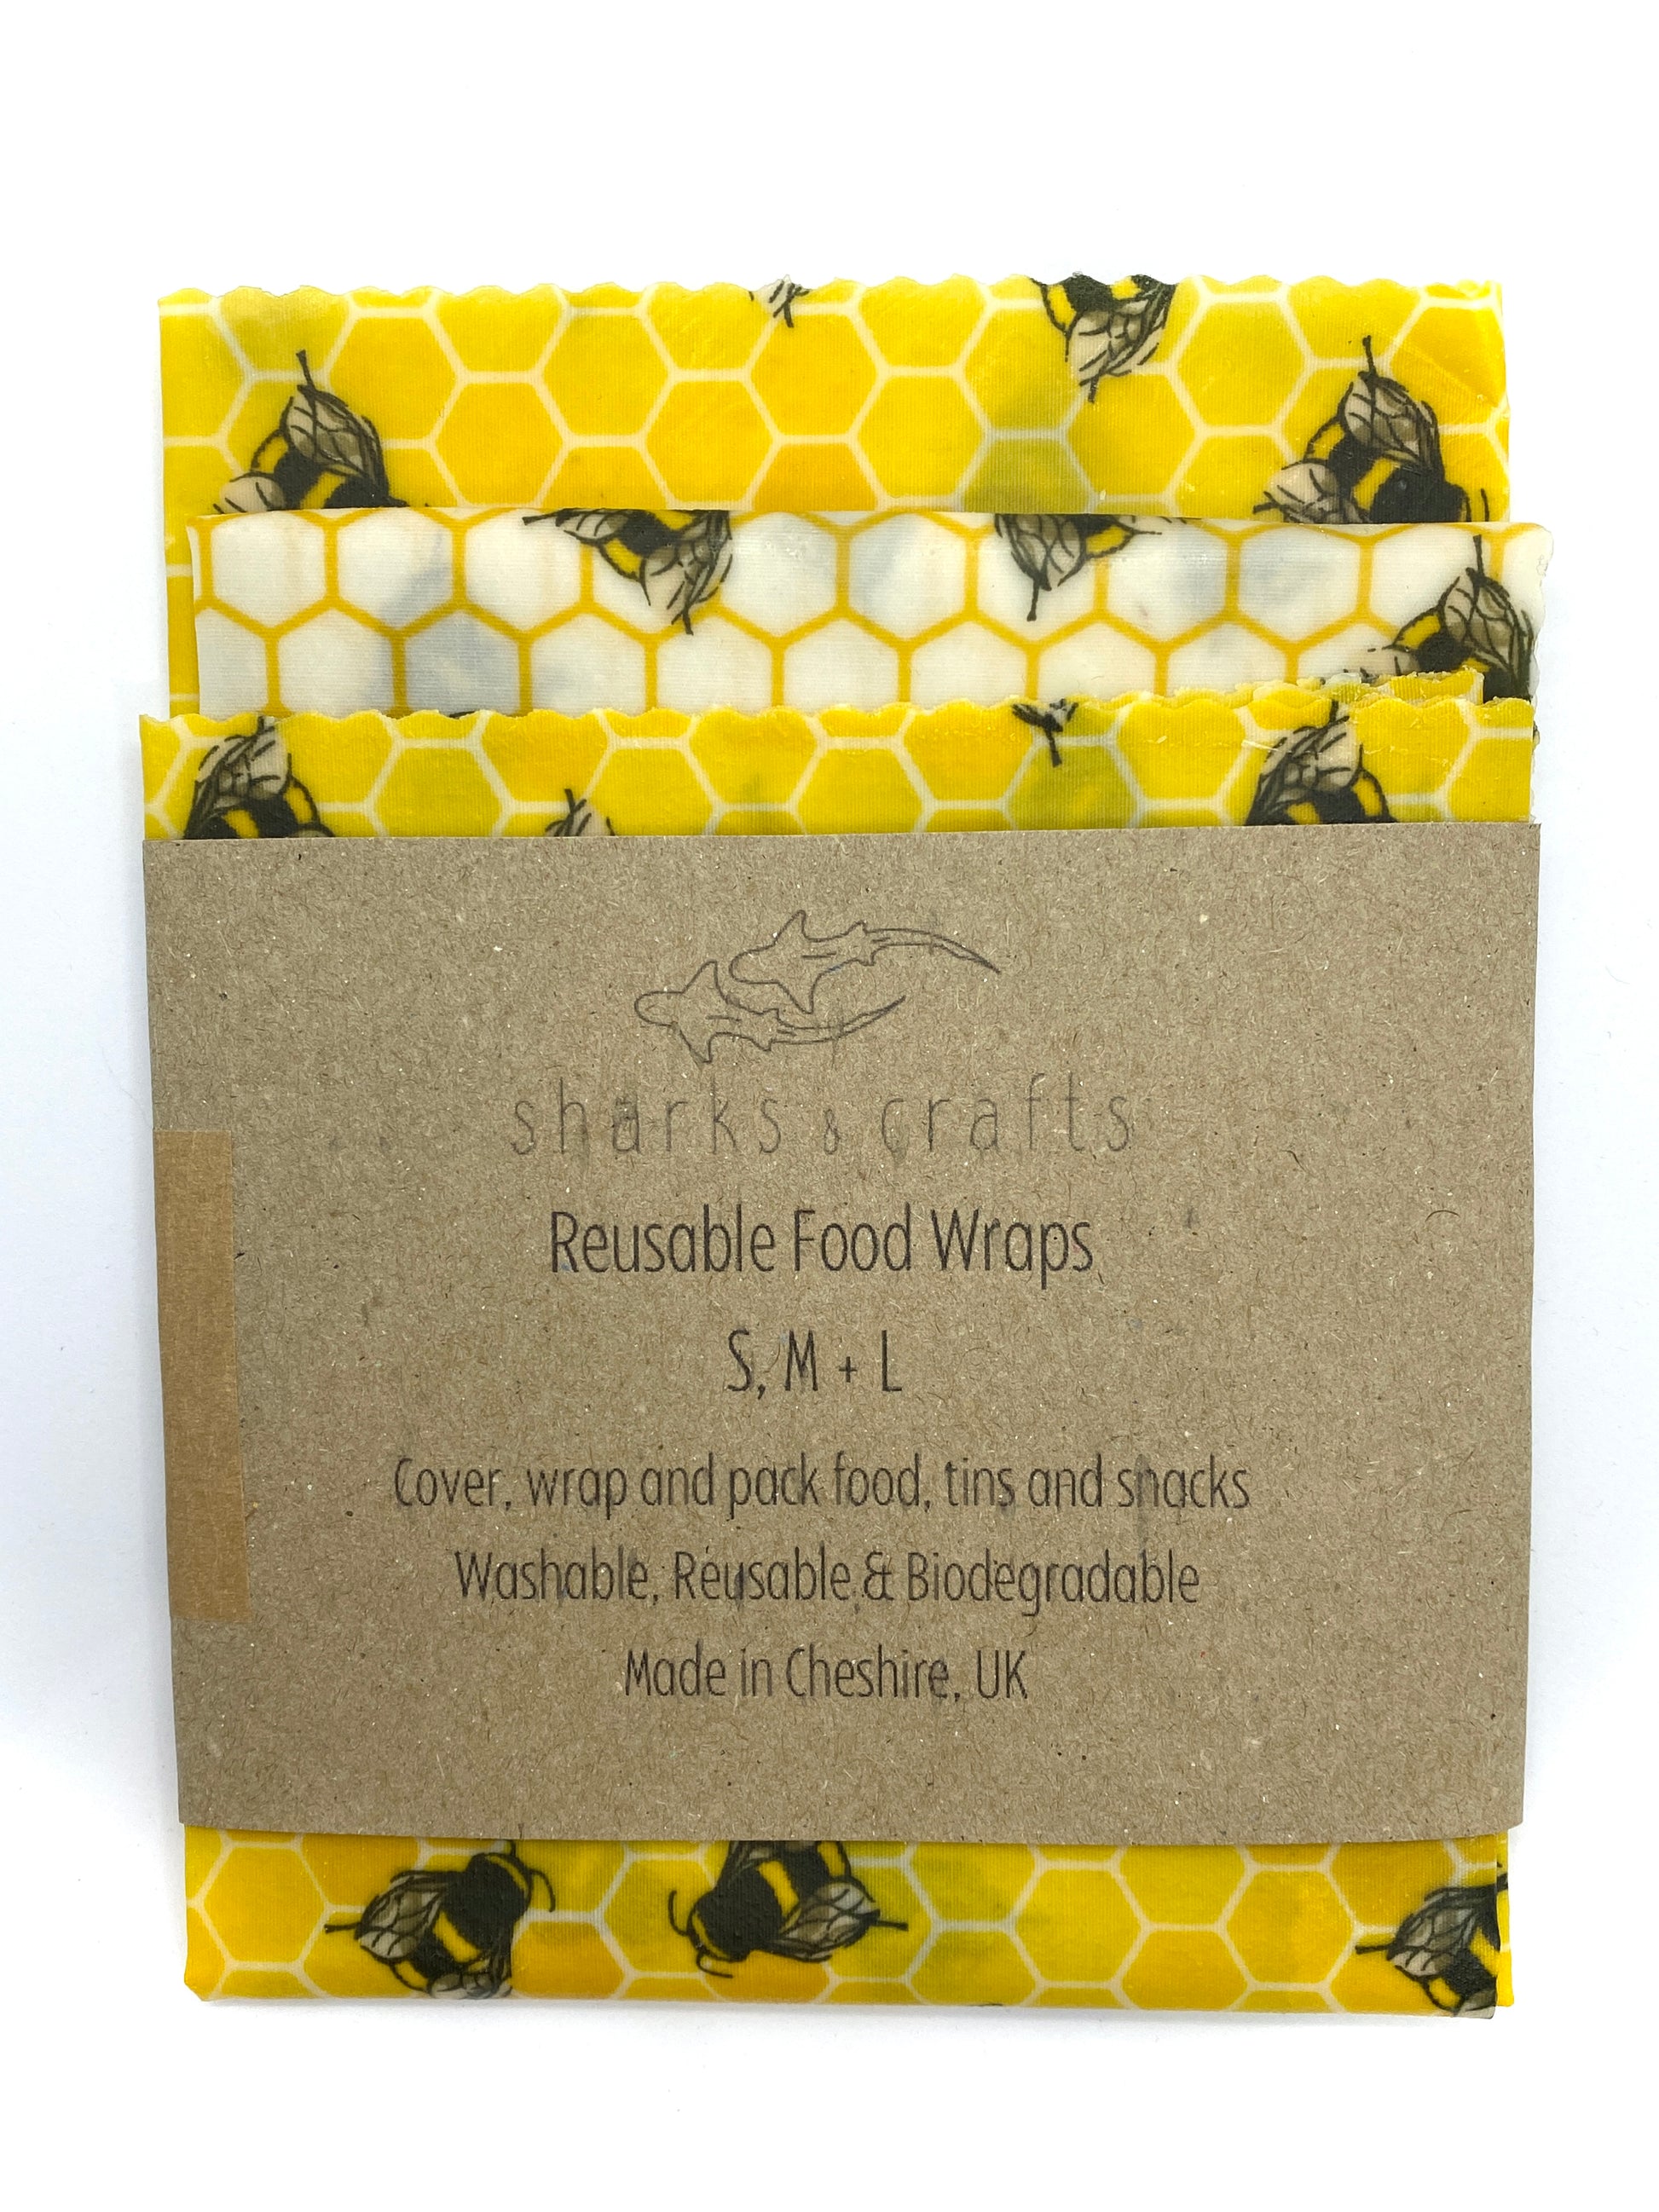 Beeswax Wrap, DIY Medium Kit, HoneyBee Wrap, Great Gift